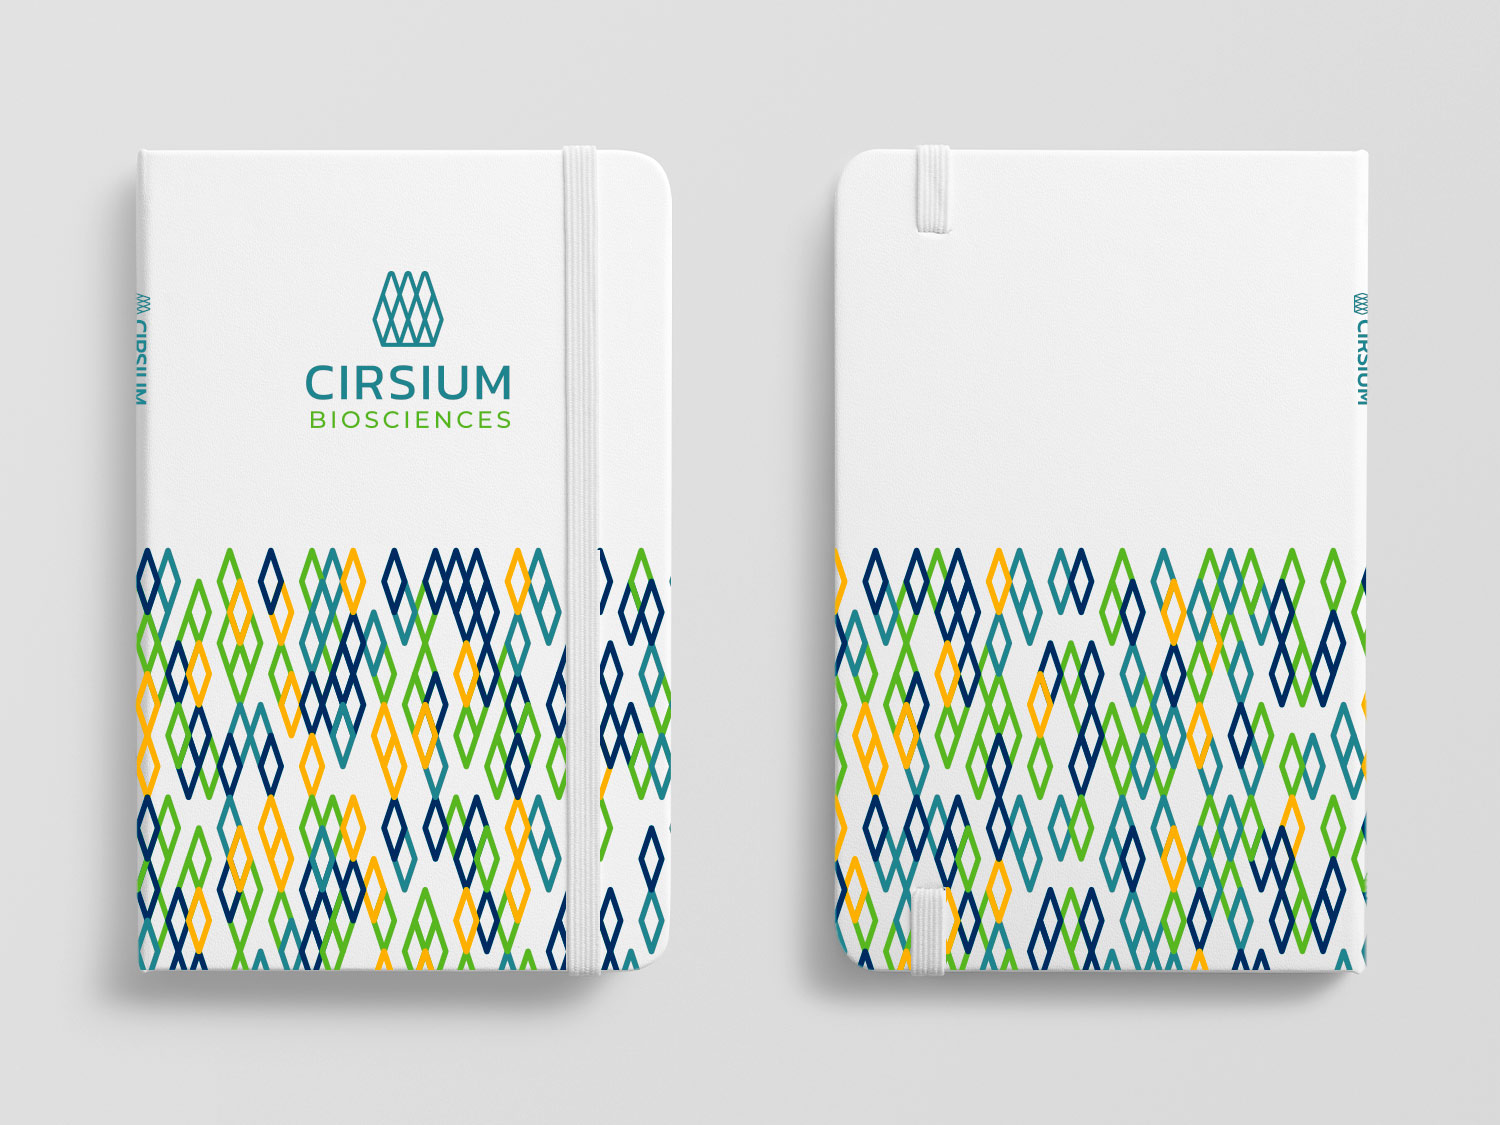 Cirsium Biosciences Brand identity in notebook